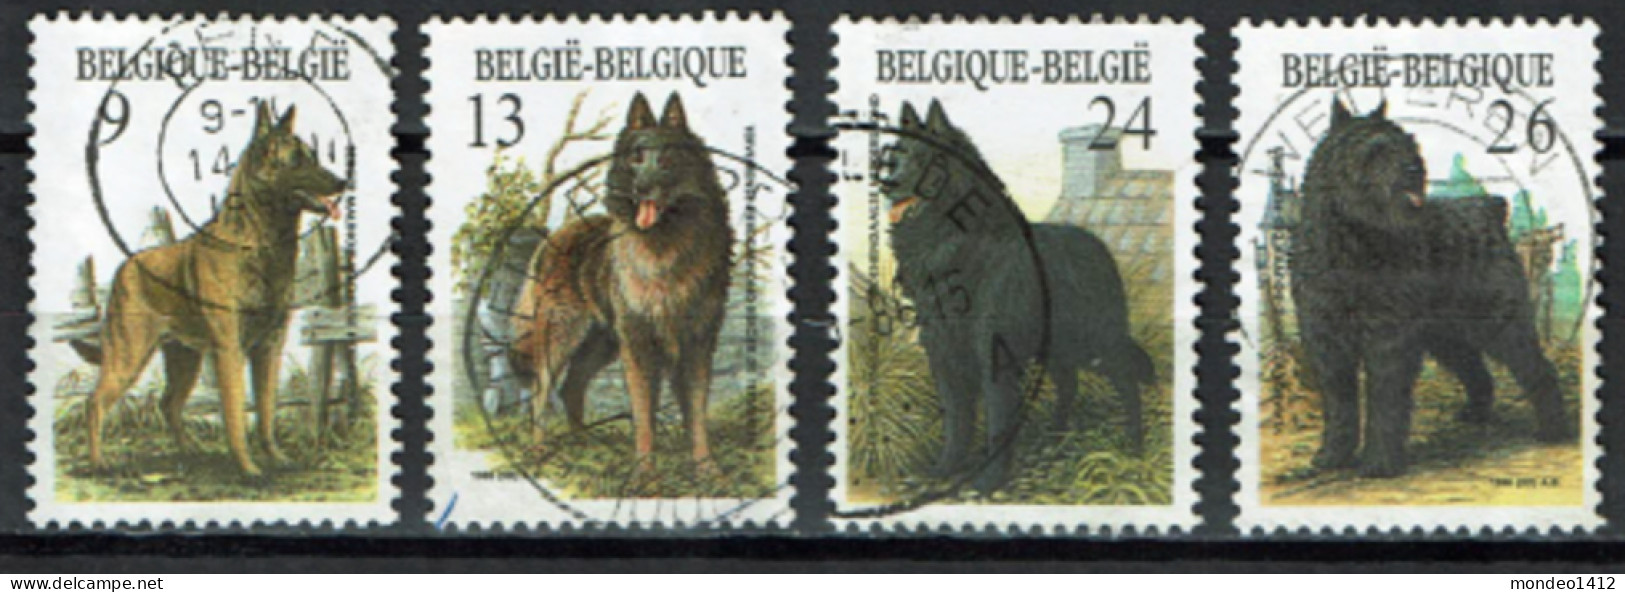 België 1986 OBP 2213/2216 - Y&T 2213/16 - Honden, Dogs, Chiens - Herdershond - Berger, Bouvier - Usati